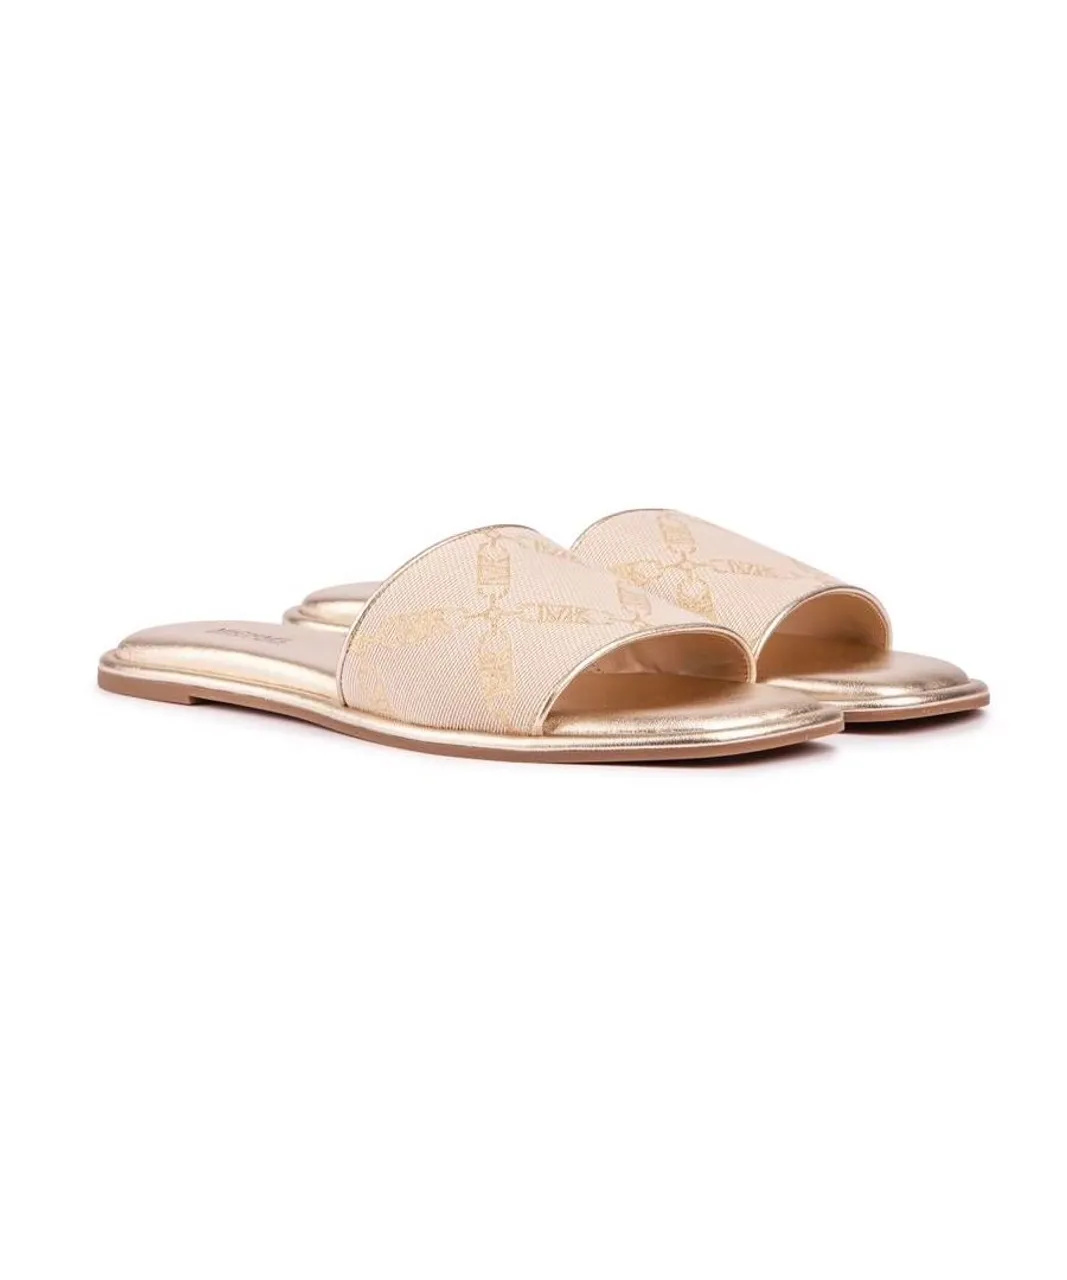 Michael Kors Womens Hayworth Slide Sandals - Natural Textile